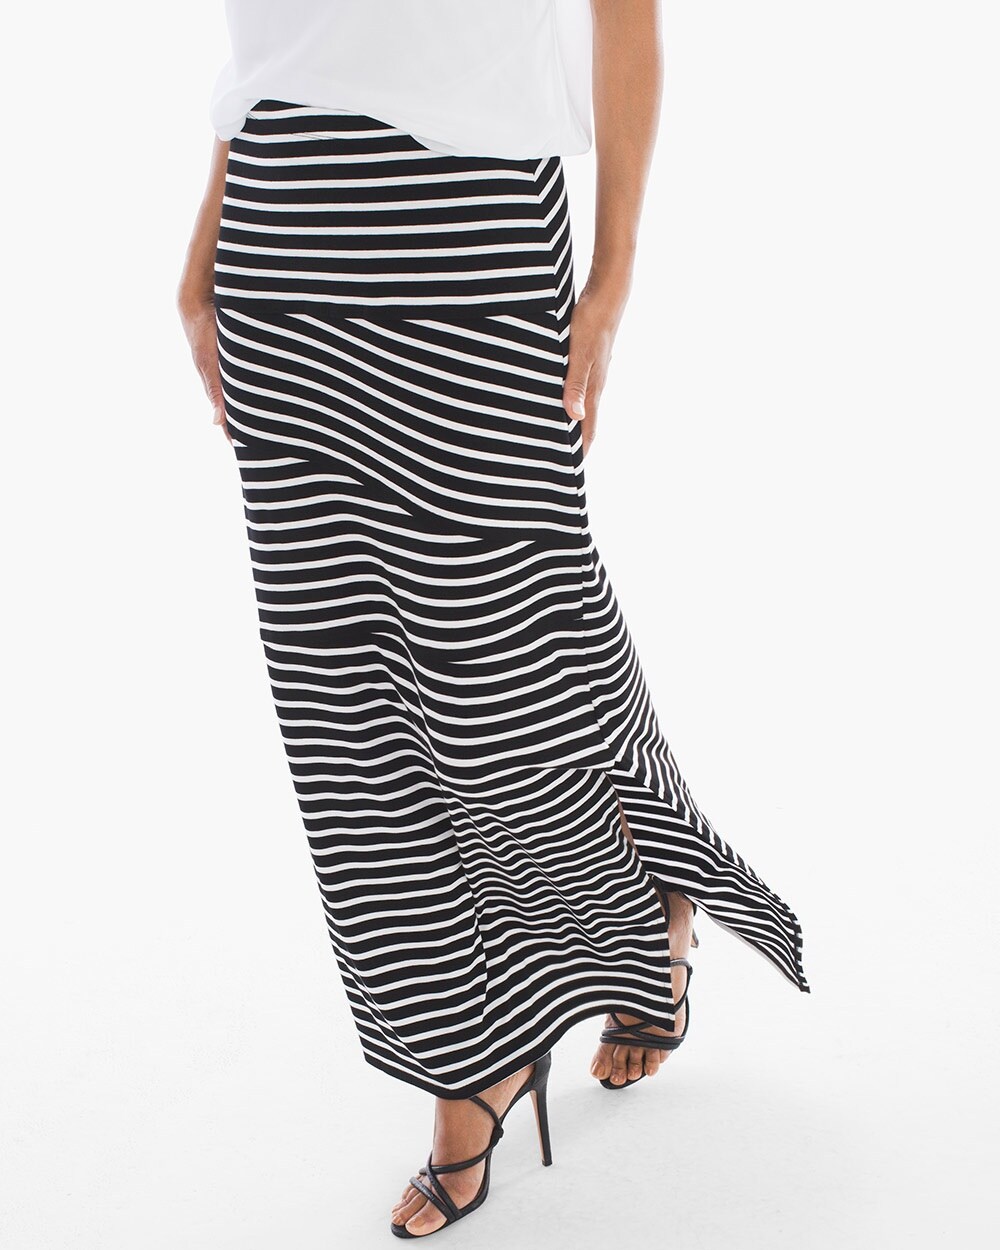 Tinley Black and White Striped Maxi Skirt